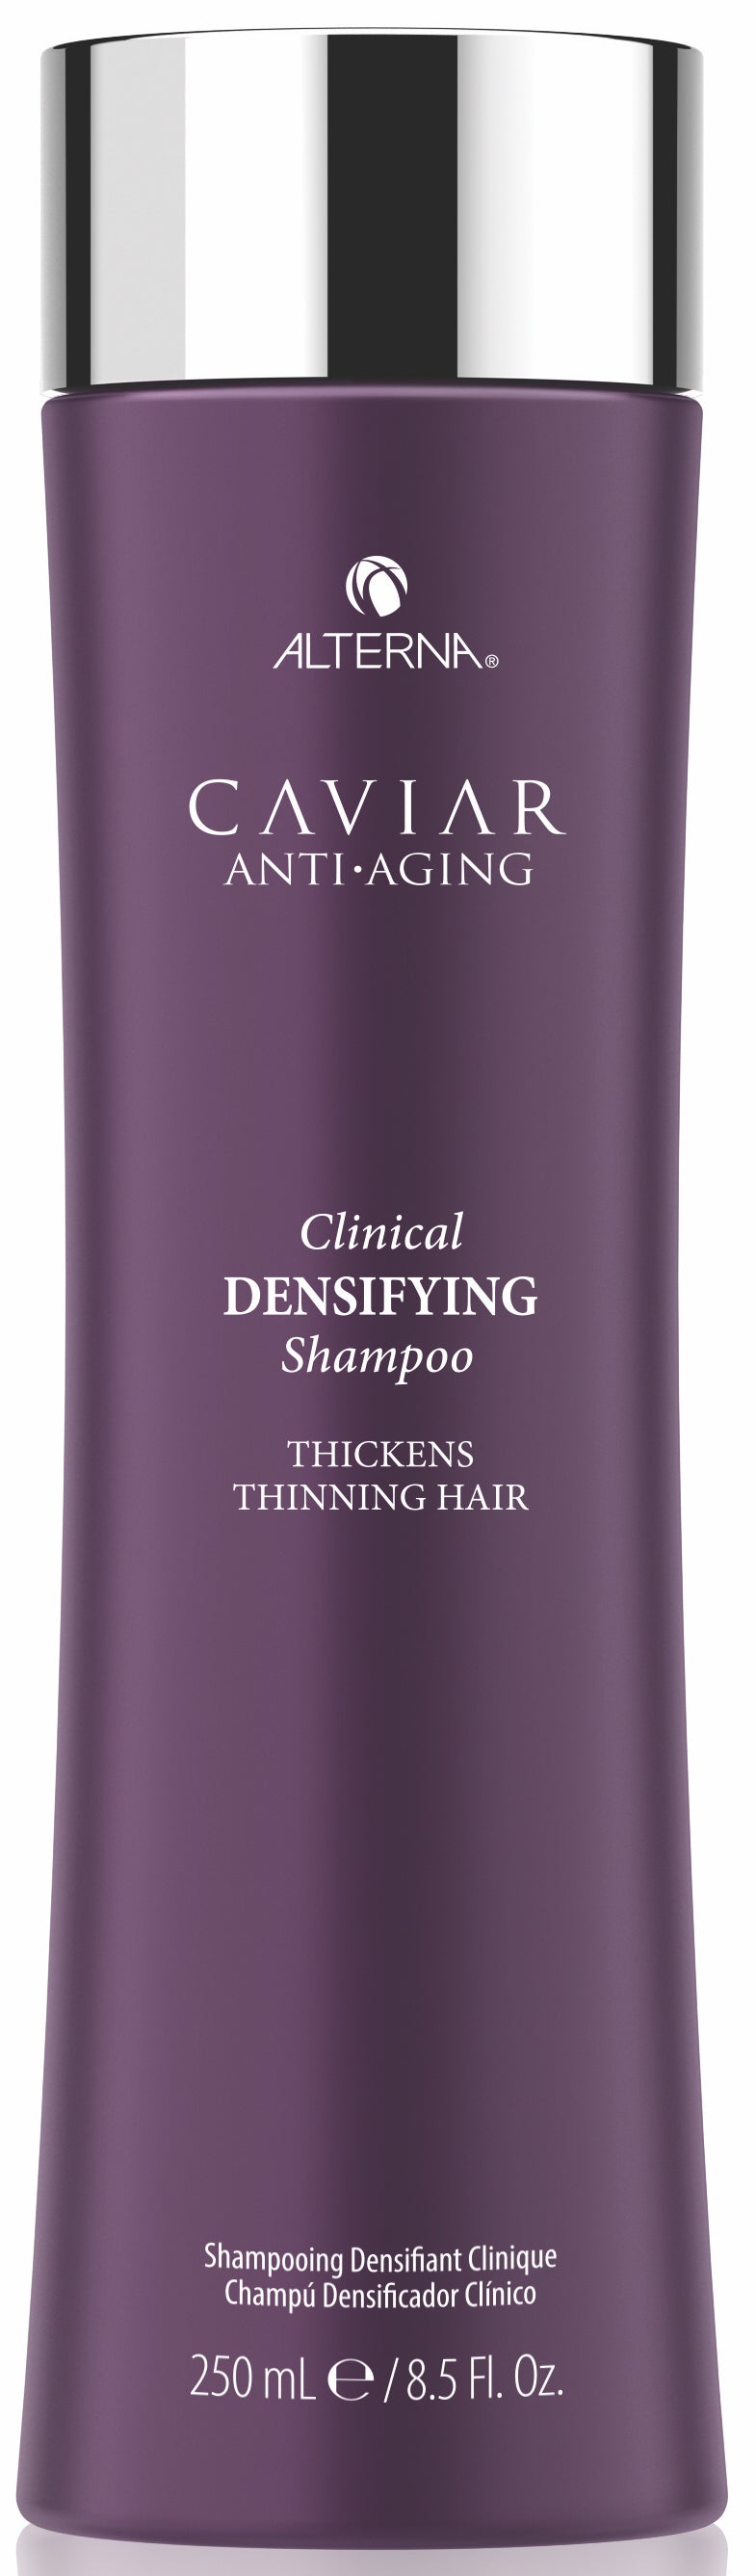 clinical densifying shampoo